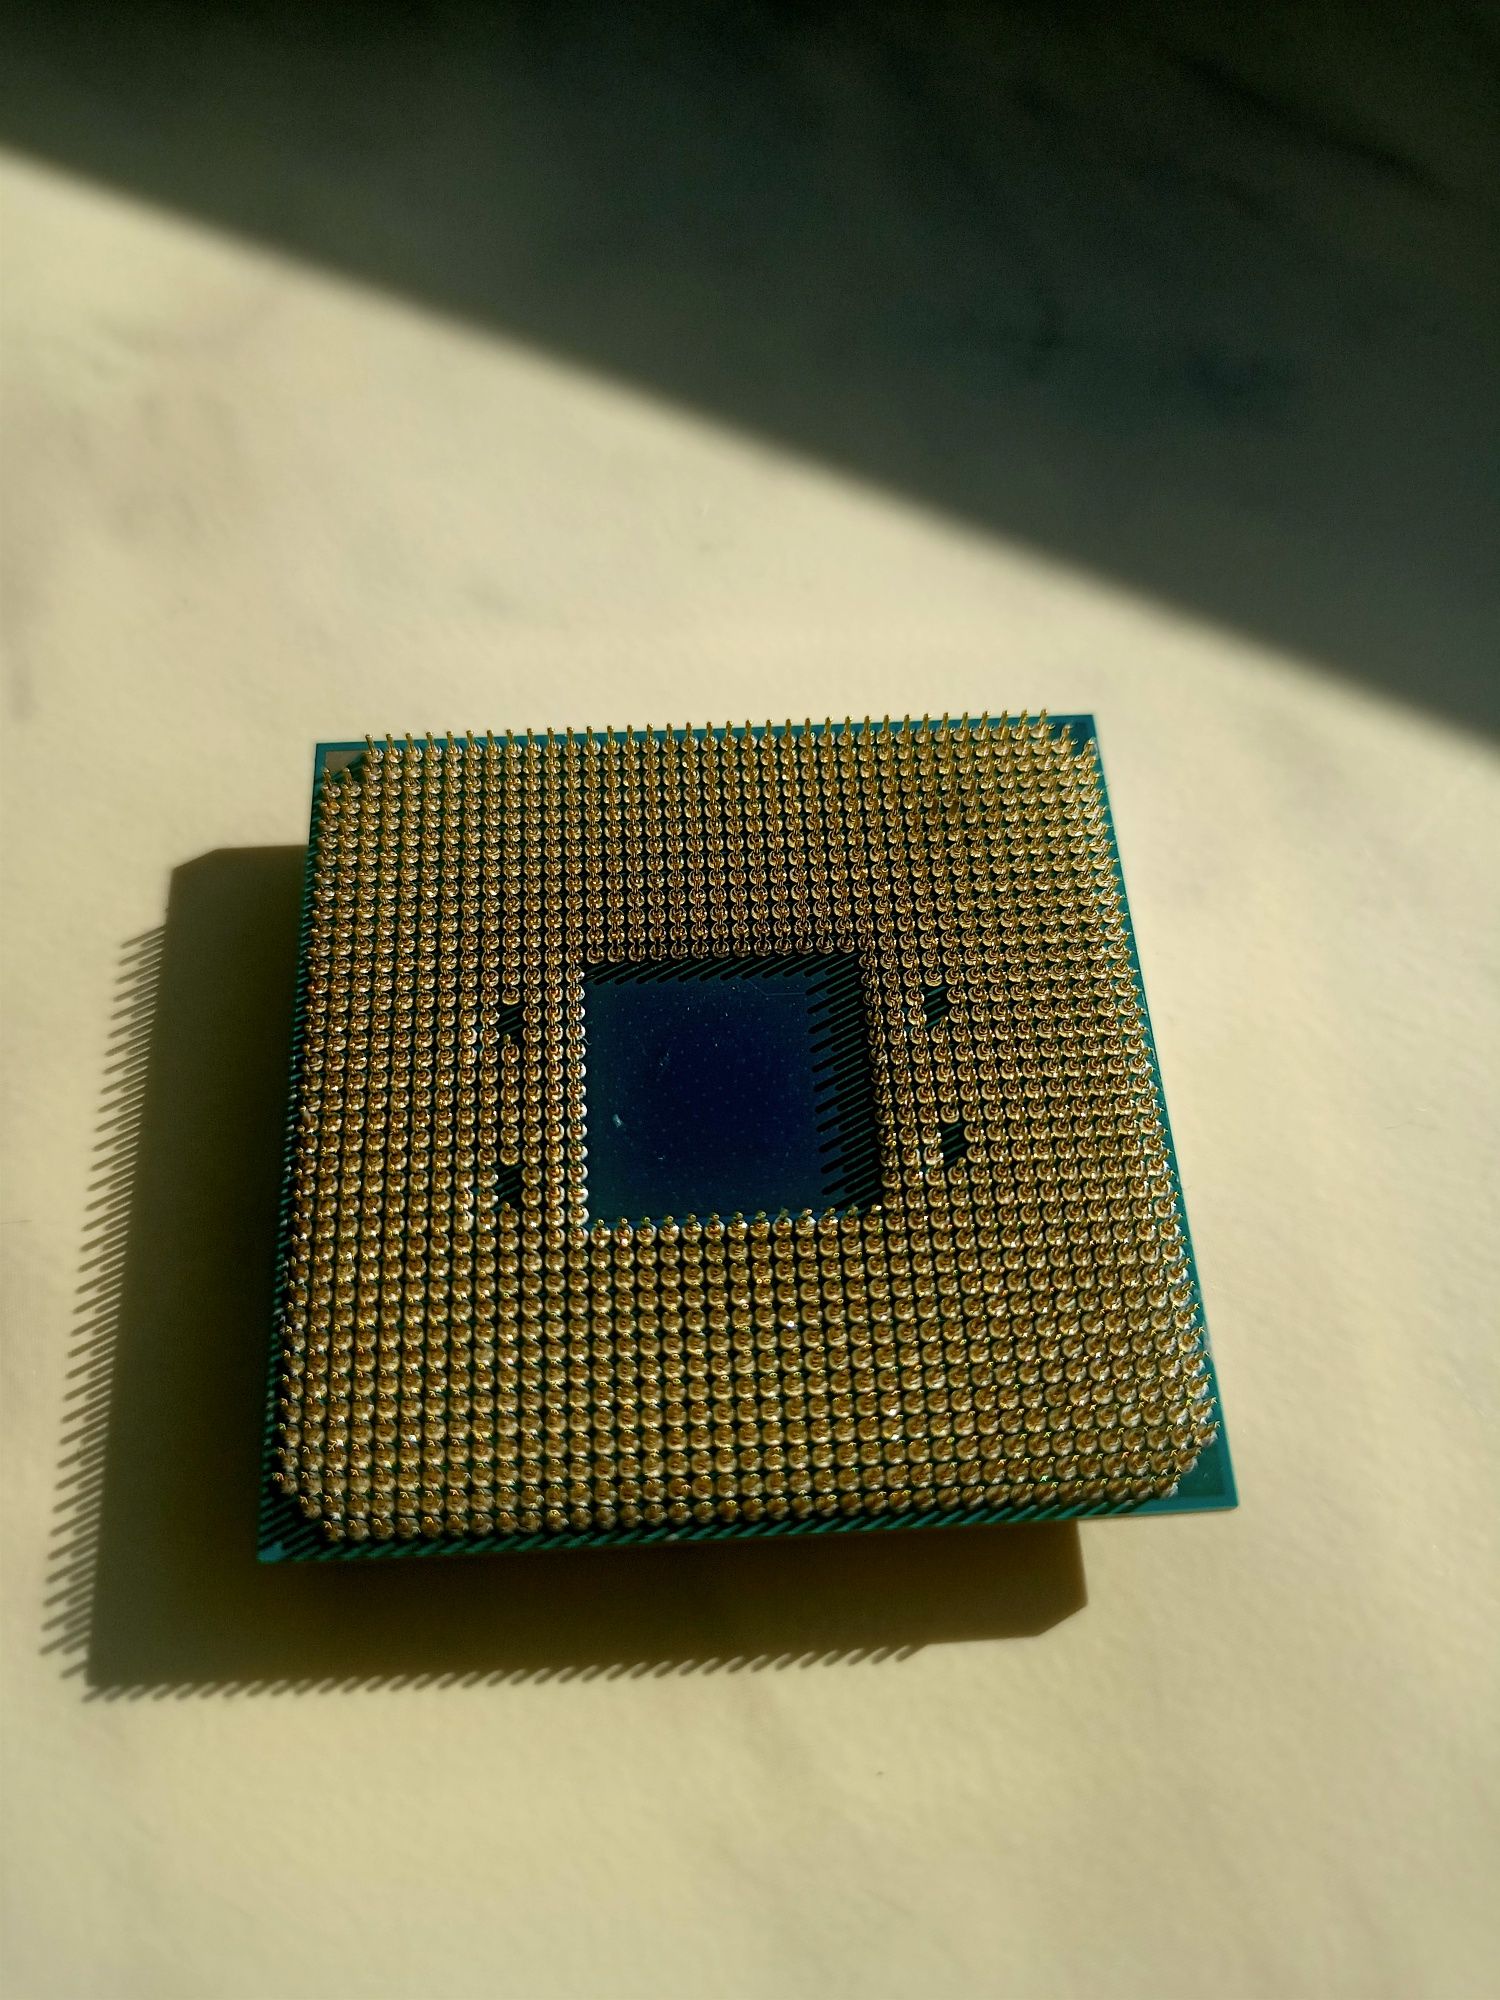 Procesor AMD Ryzen 7 1800X 8 rdzeni/AM4